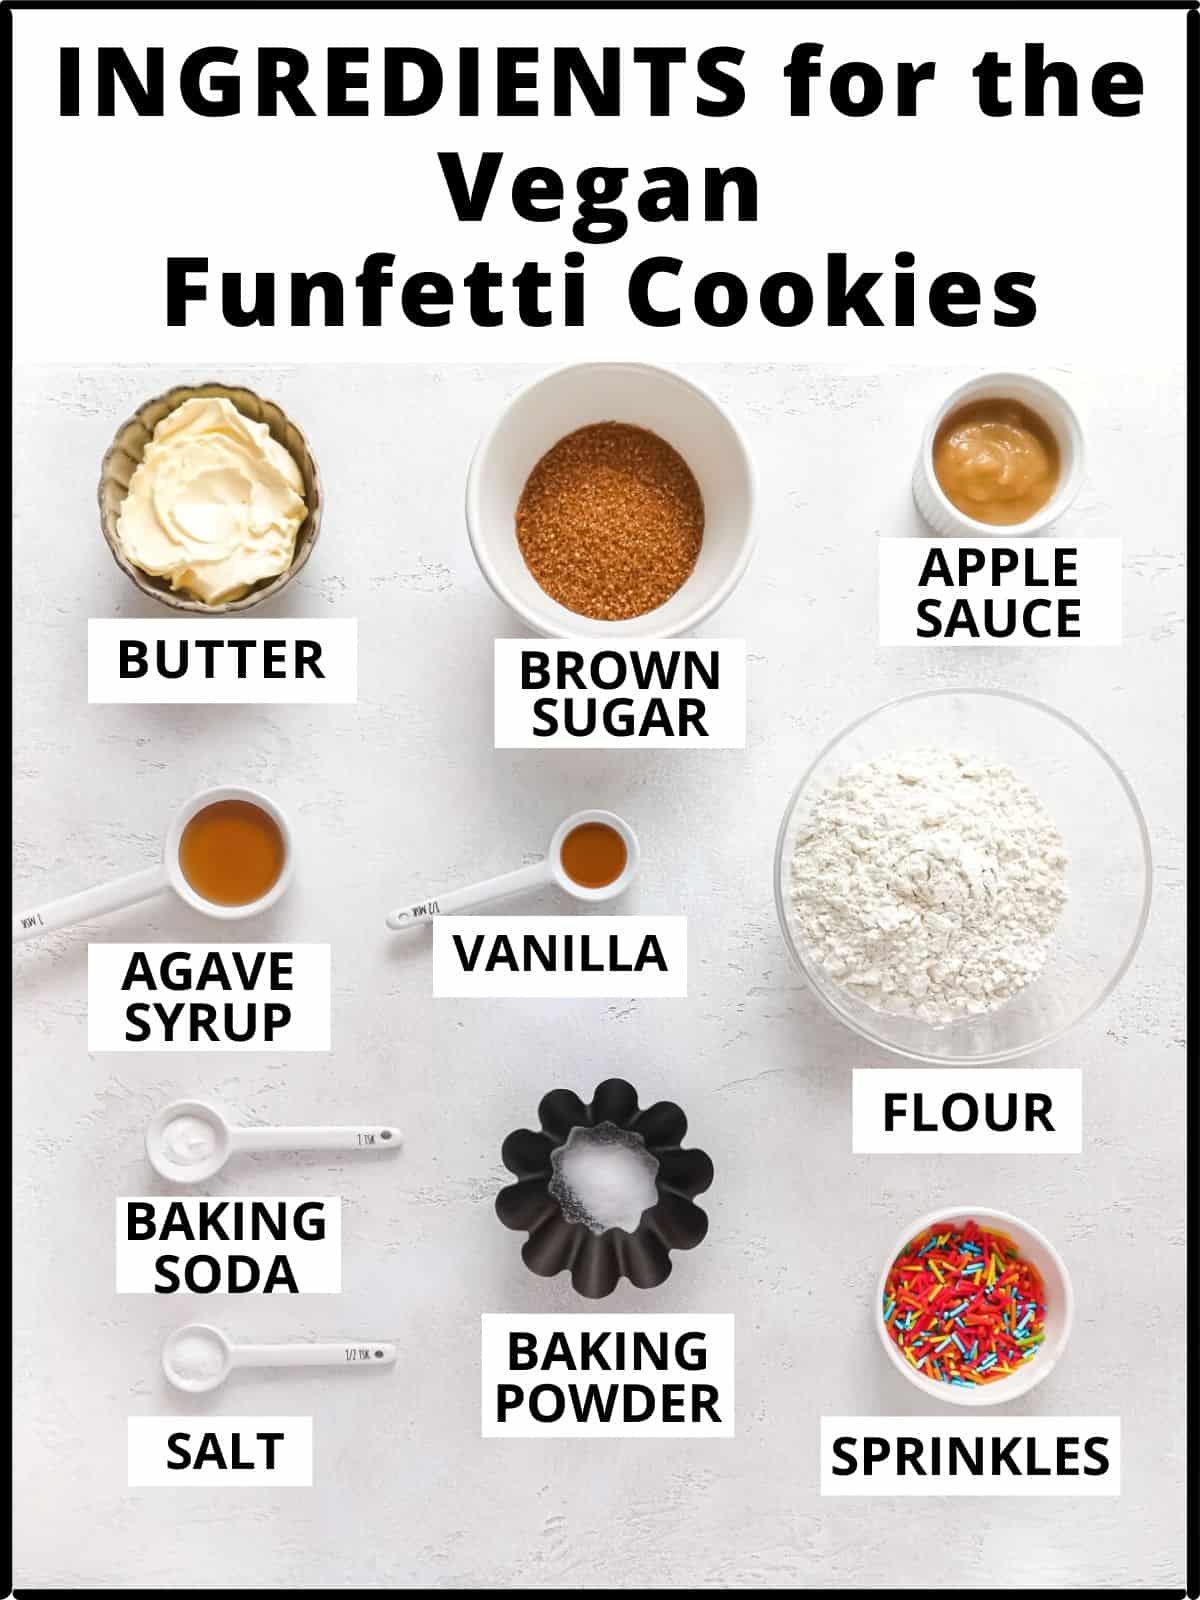 Ingredients for the cookies: butter, brown sugar, apple sauce, agave syrup, vanilla, flour, baking soda, baking powder, salt, sprinkles